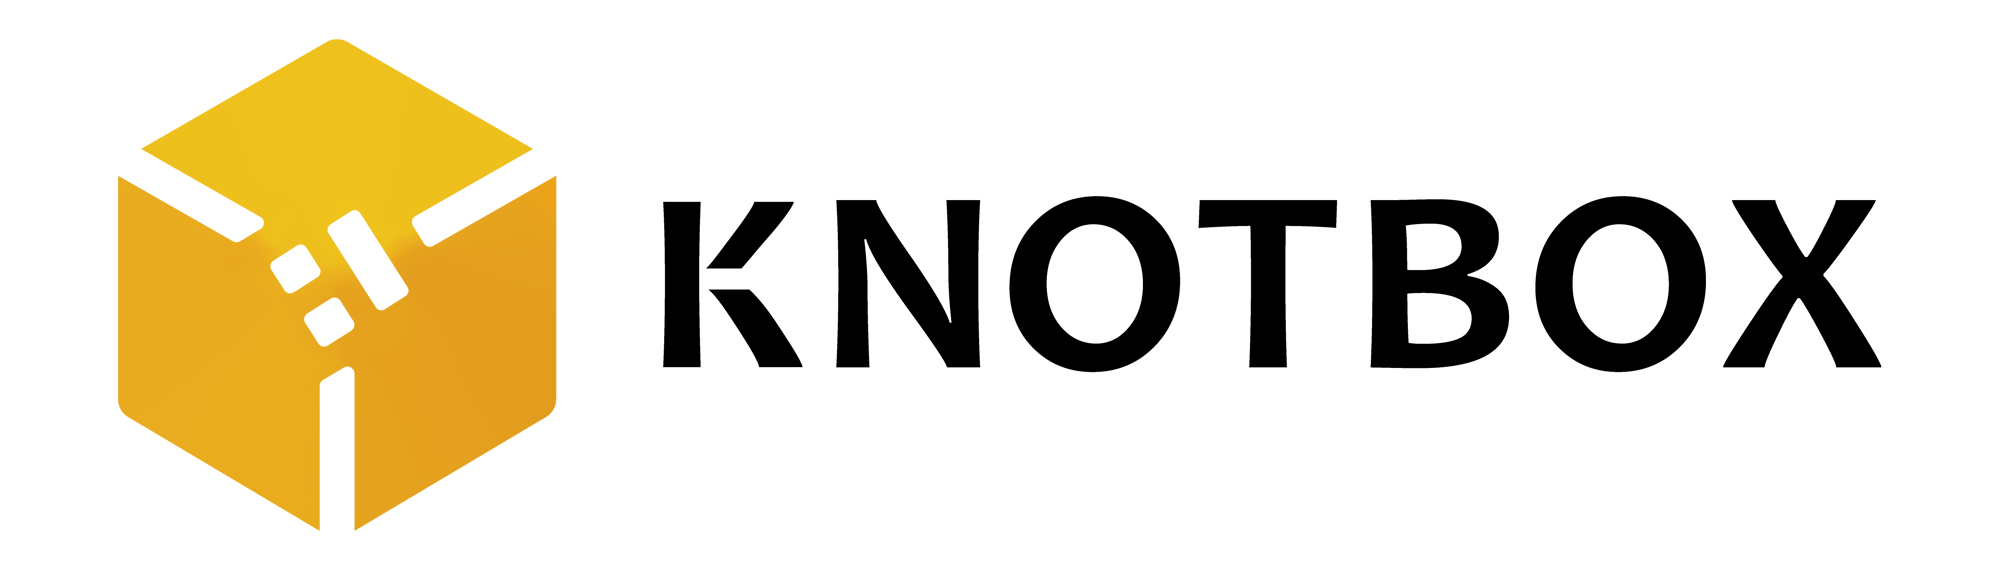 knotbox